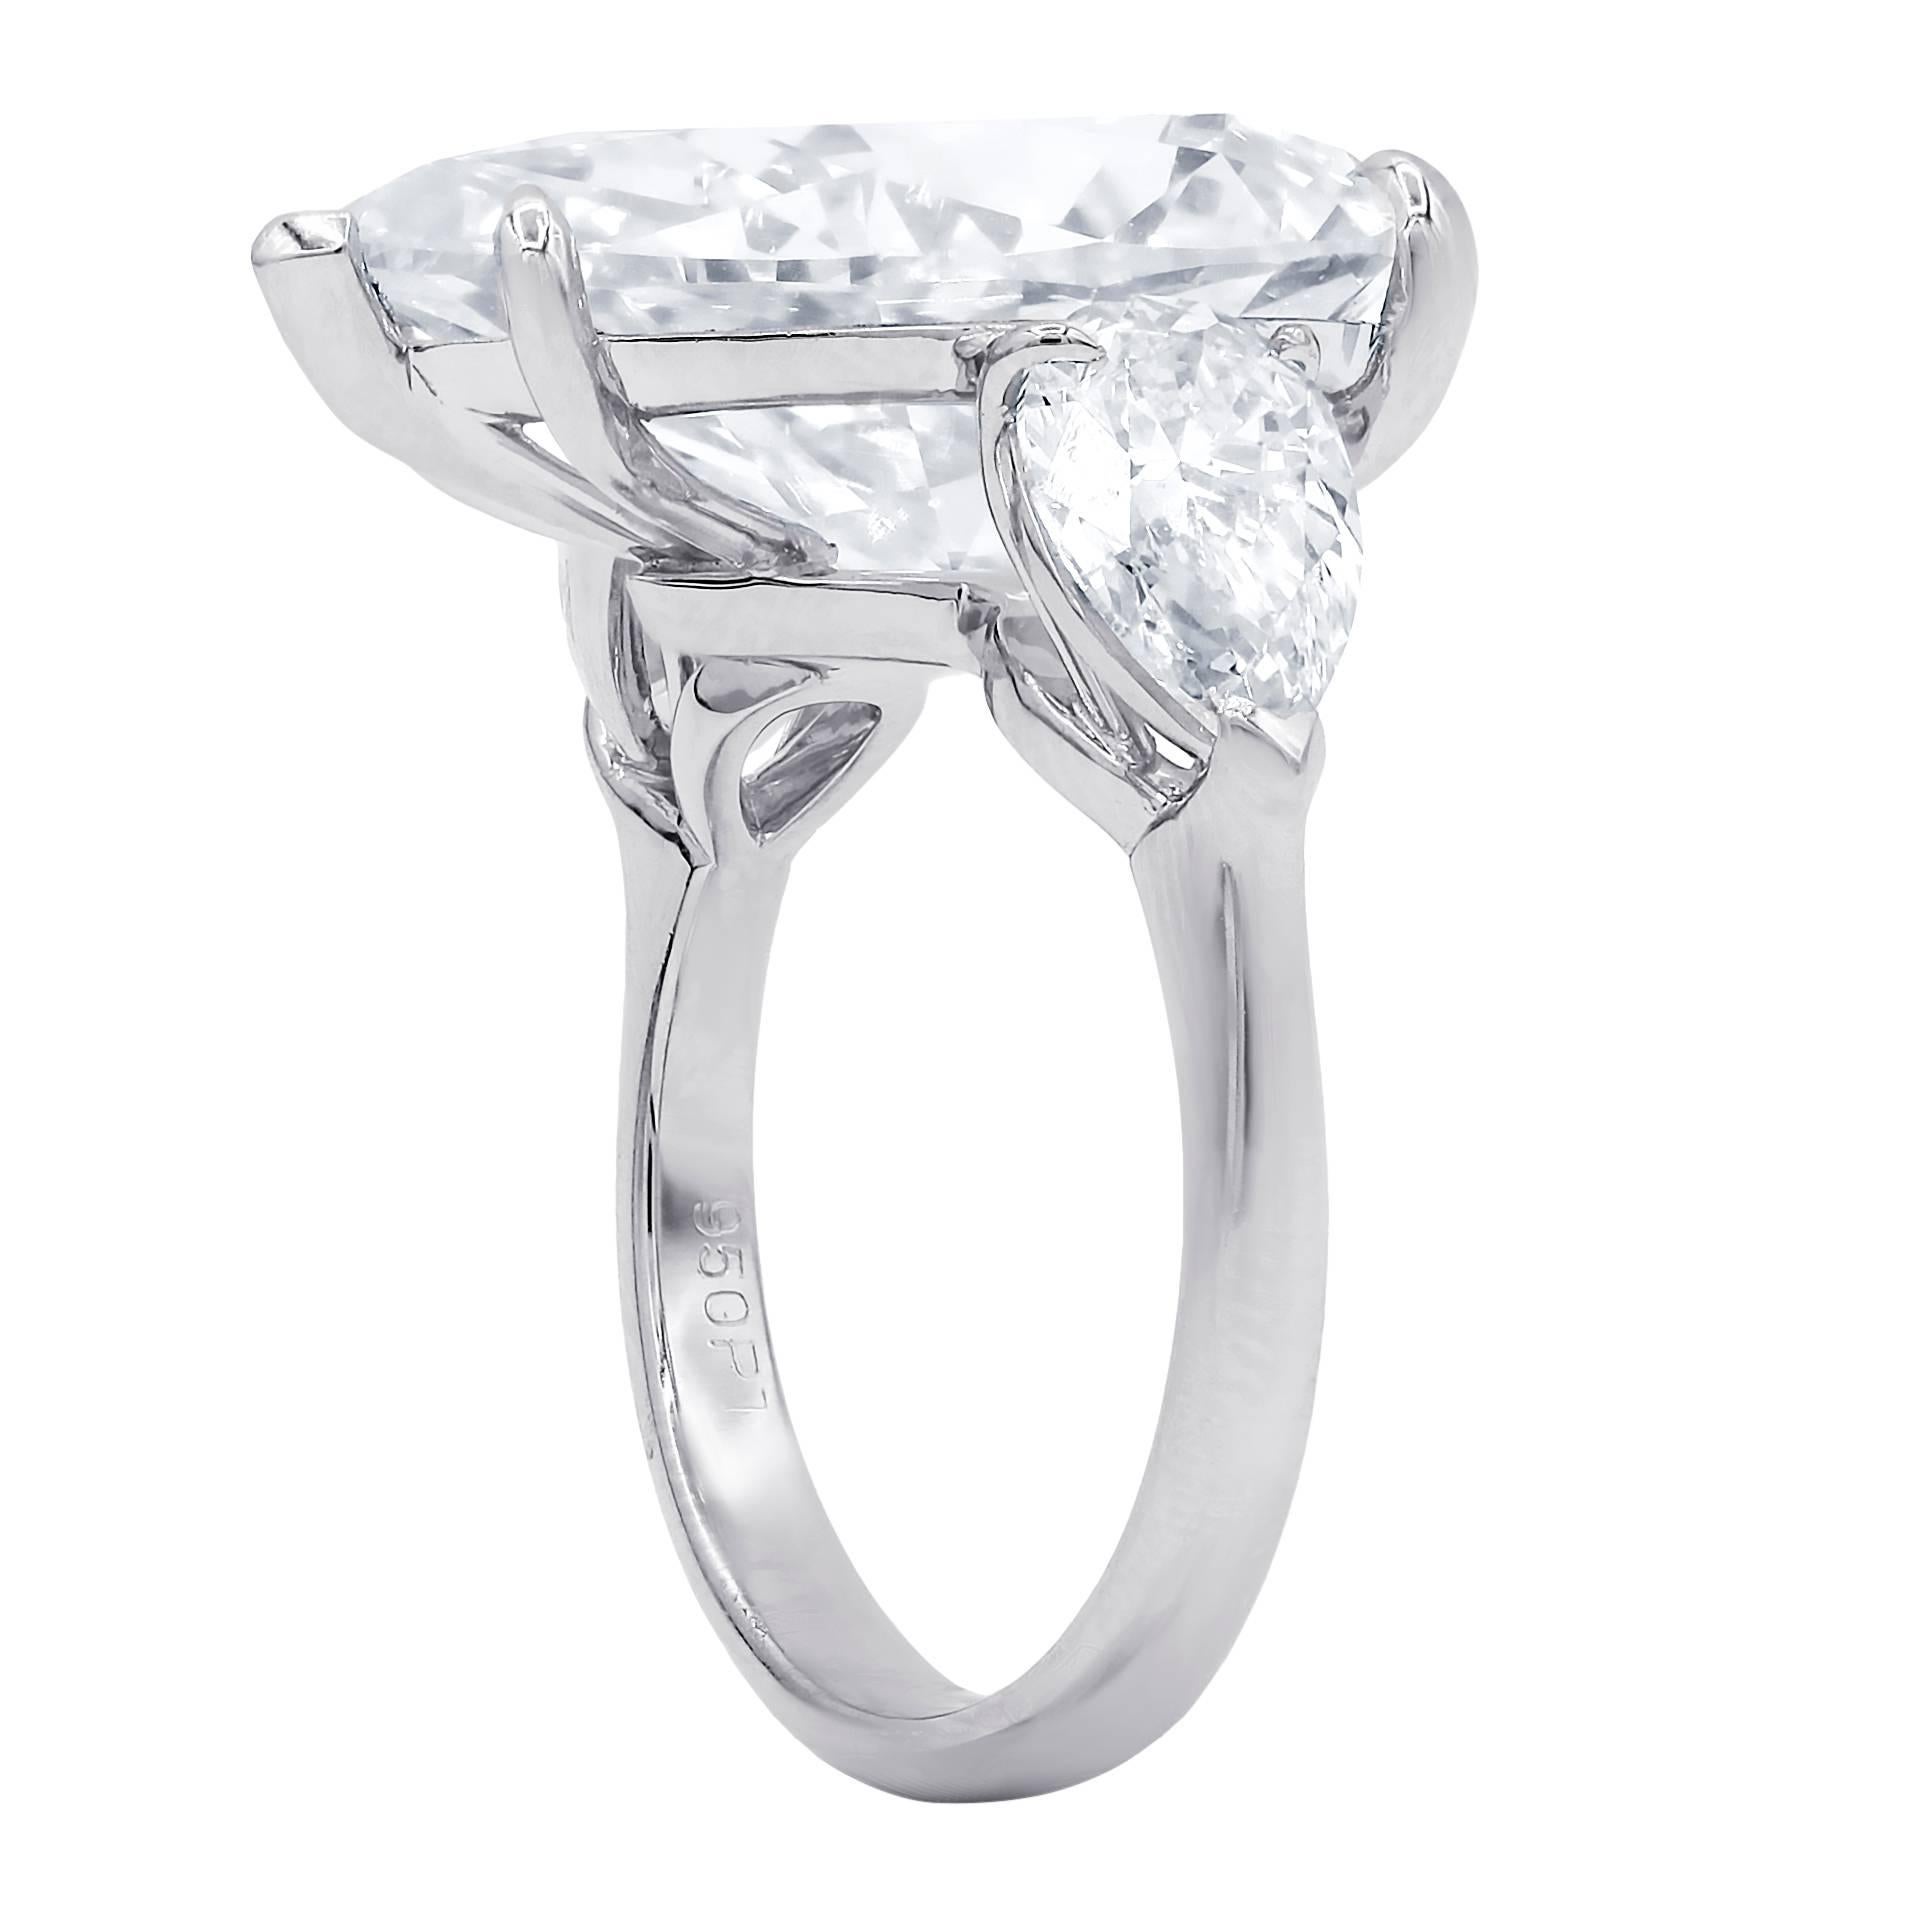 Custom designed diamond ring consisting of center GIA certified pear cut diamond weighing 10.87 carats J/VS2  and accented by  two  GIA certified pear cut  diamonds on each side, weighing 1.00 carat J/VS2 and 1.01 carats J/VS2 set in platinum